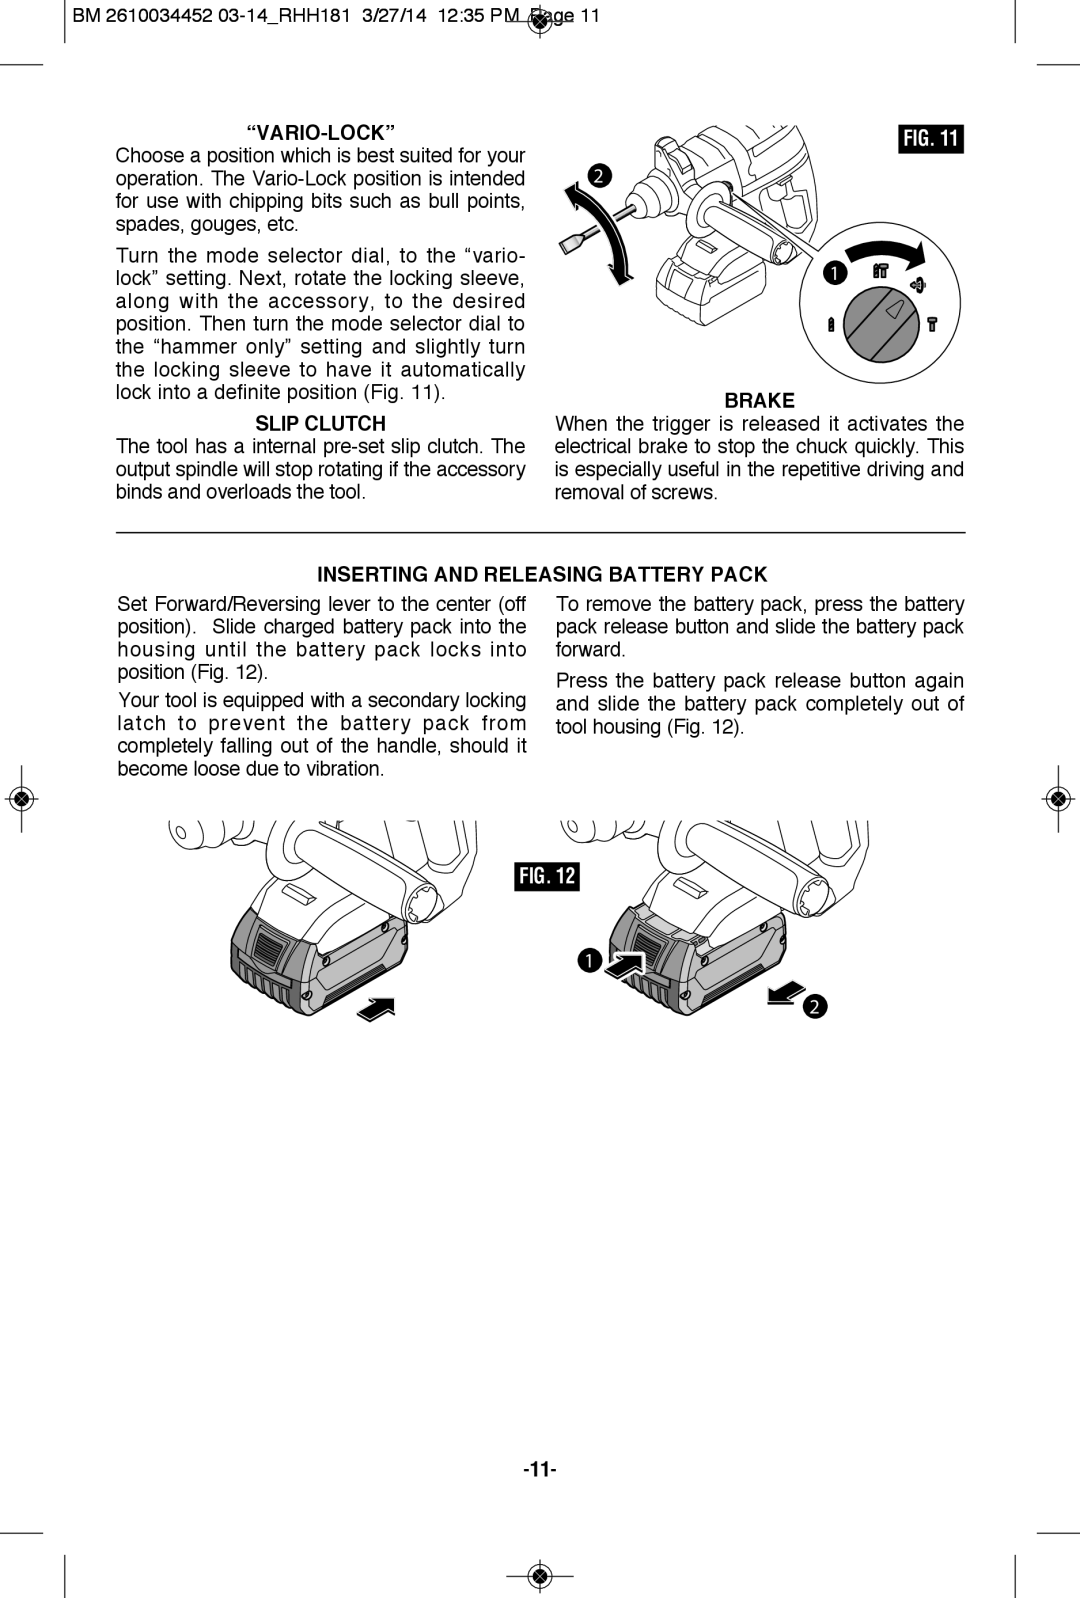 Bosch Power Tools RHH181BL, RHH181-01, RHH181BN manual “Vario-Lock”, Slip Clutch, Brake, INSERTING AND RELEASING BATTERy PACK 